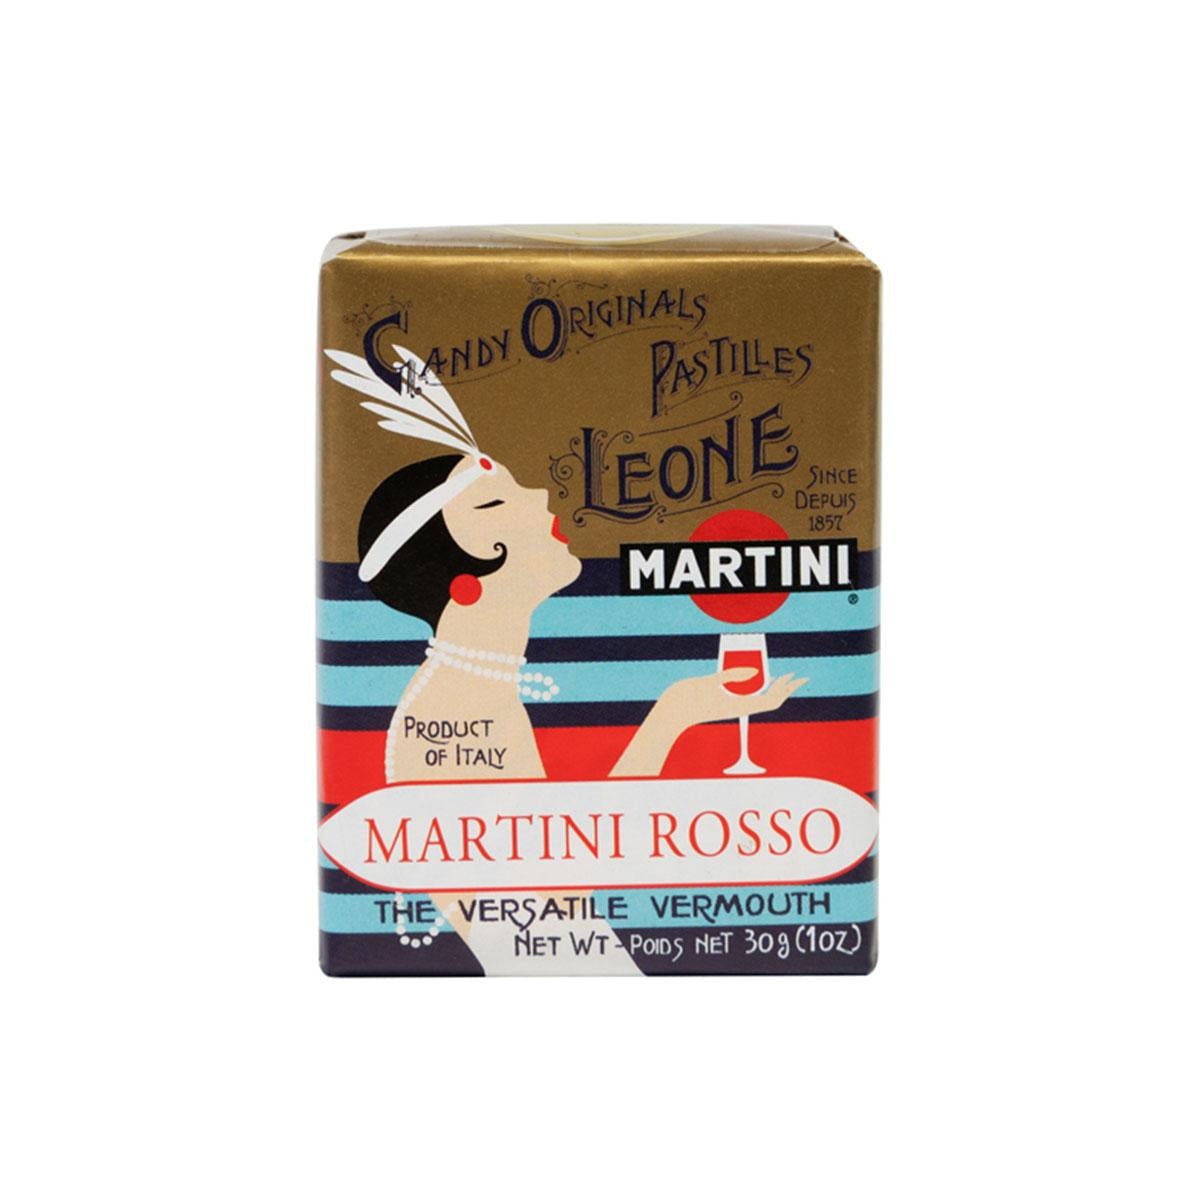 Primary image of Martini Rosso Pastilles